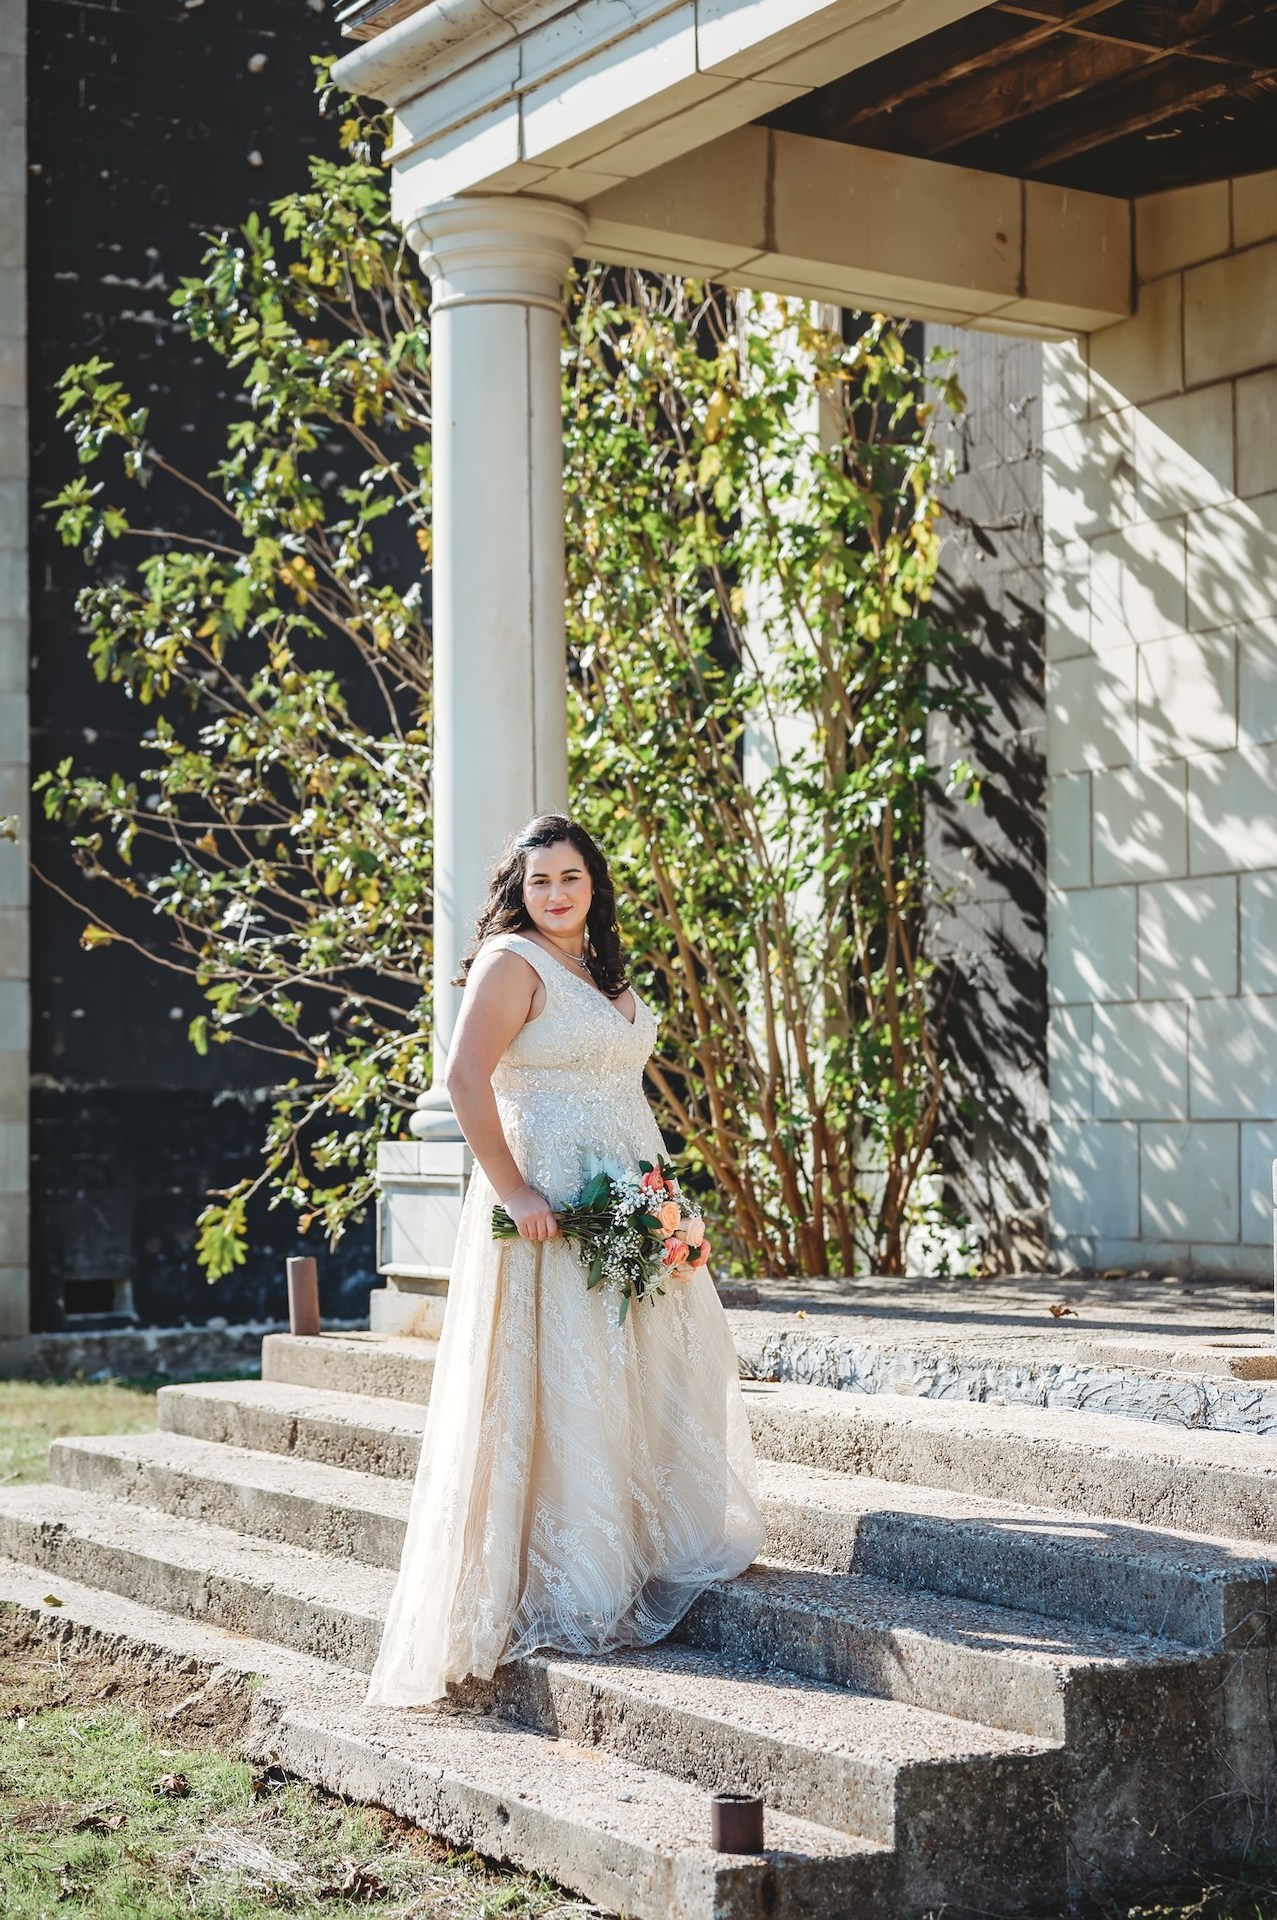 Bella Mansions - The bride in her wedding dress